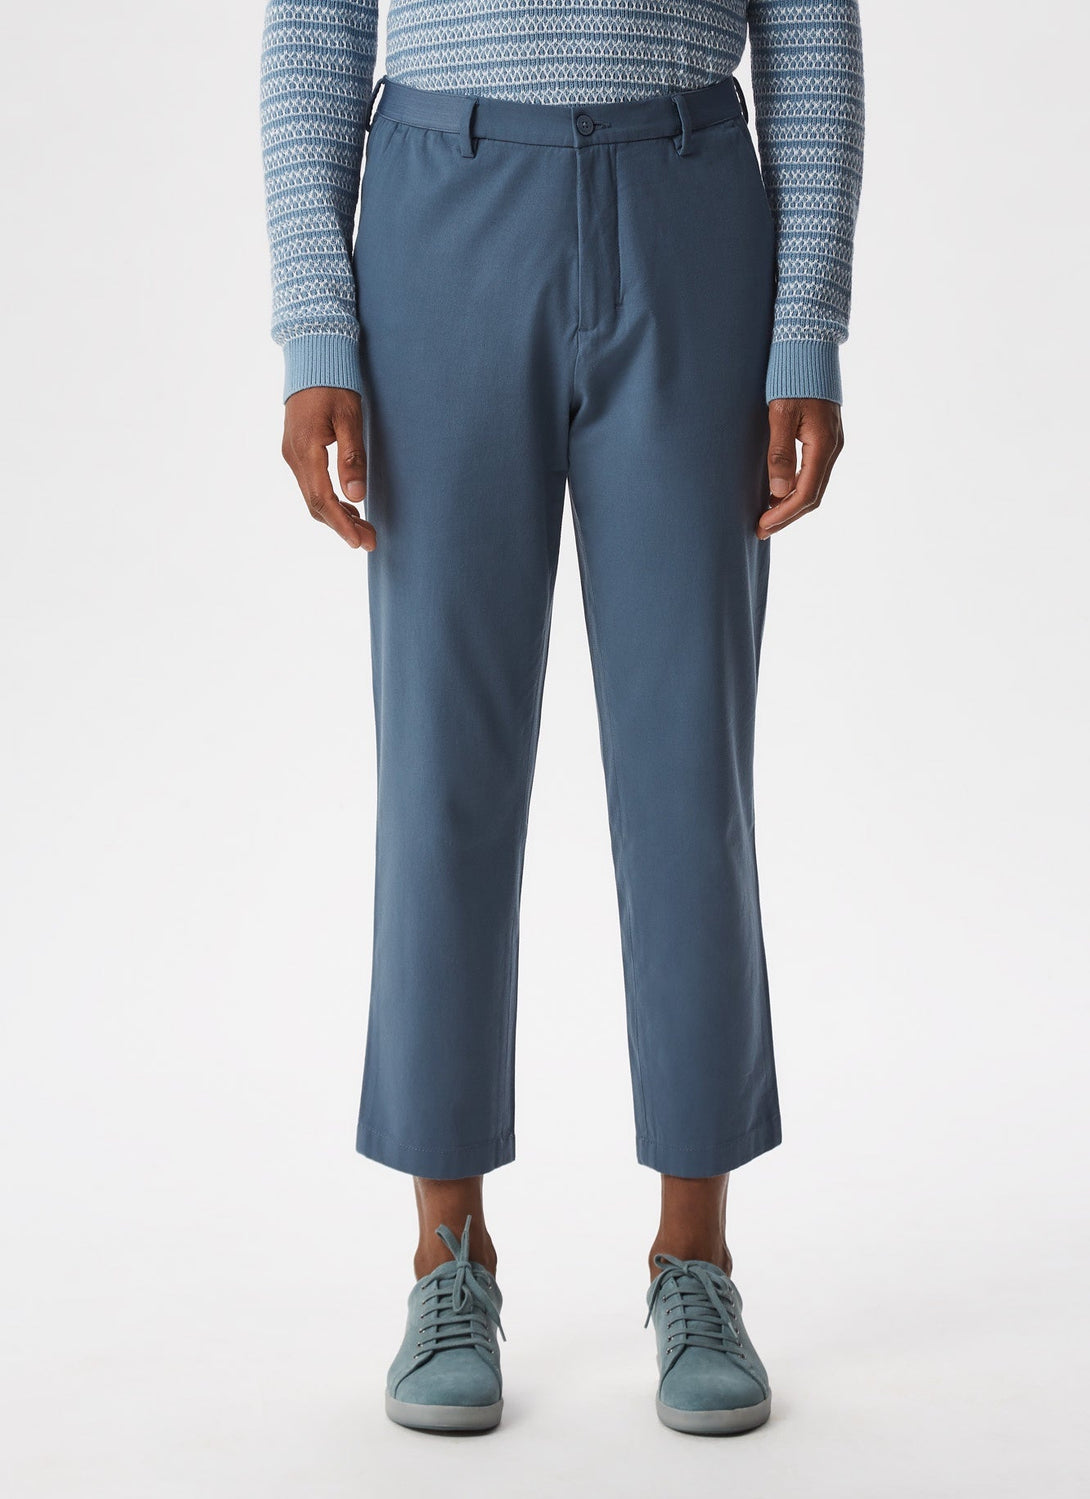 Men Trousers | Blue Cotton Trousers With Elastic Waistline by Spanish designer Adolfo Dominguez